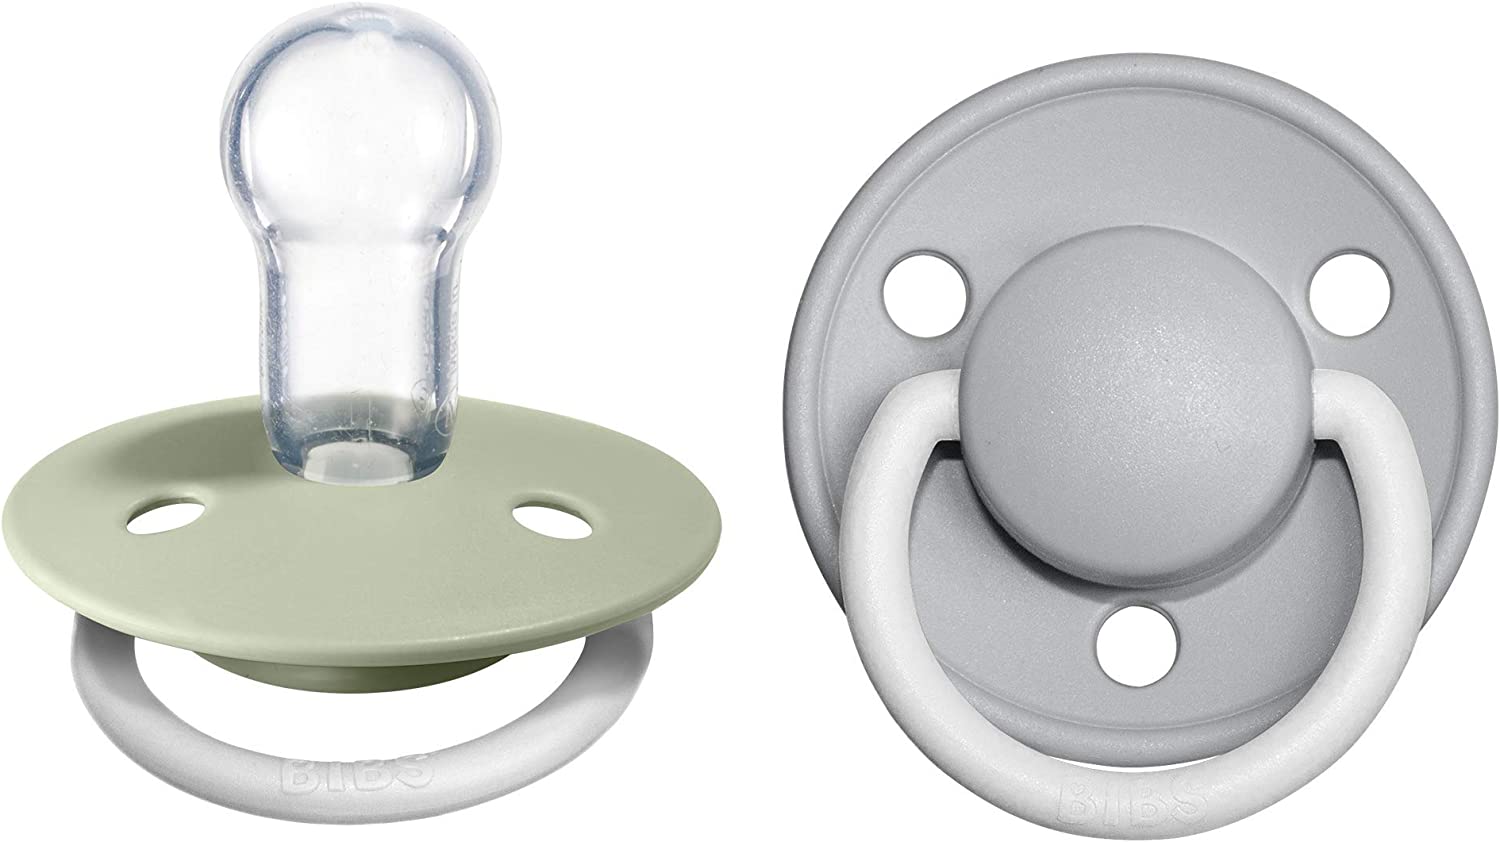 Bibs - Chupetes de bebé, goma natural sin BPA, fabricados en Dinamarca,  juego de 2 chupetes color verde militar y roble oscuro (0 a 6 meses)